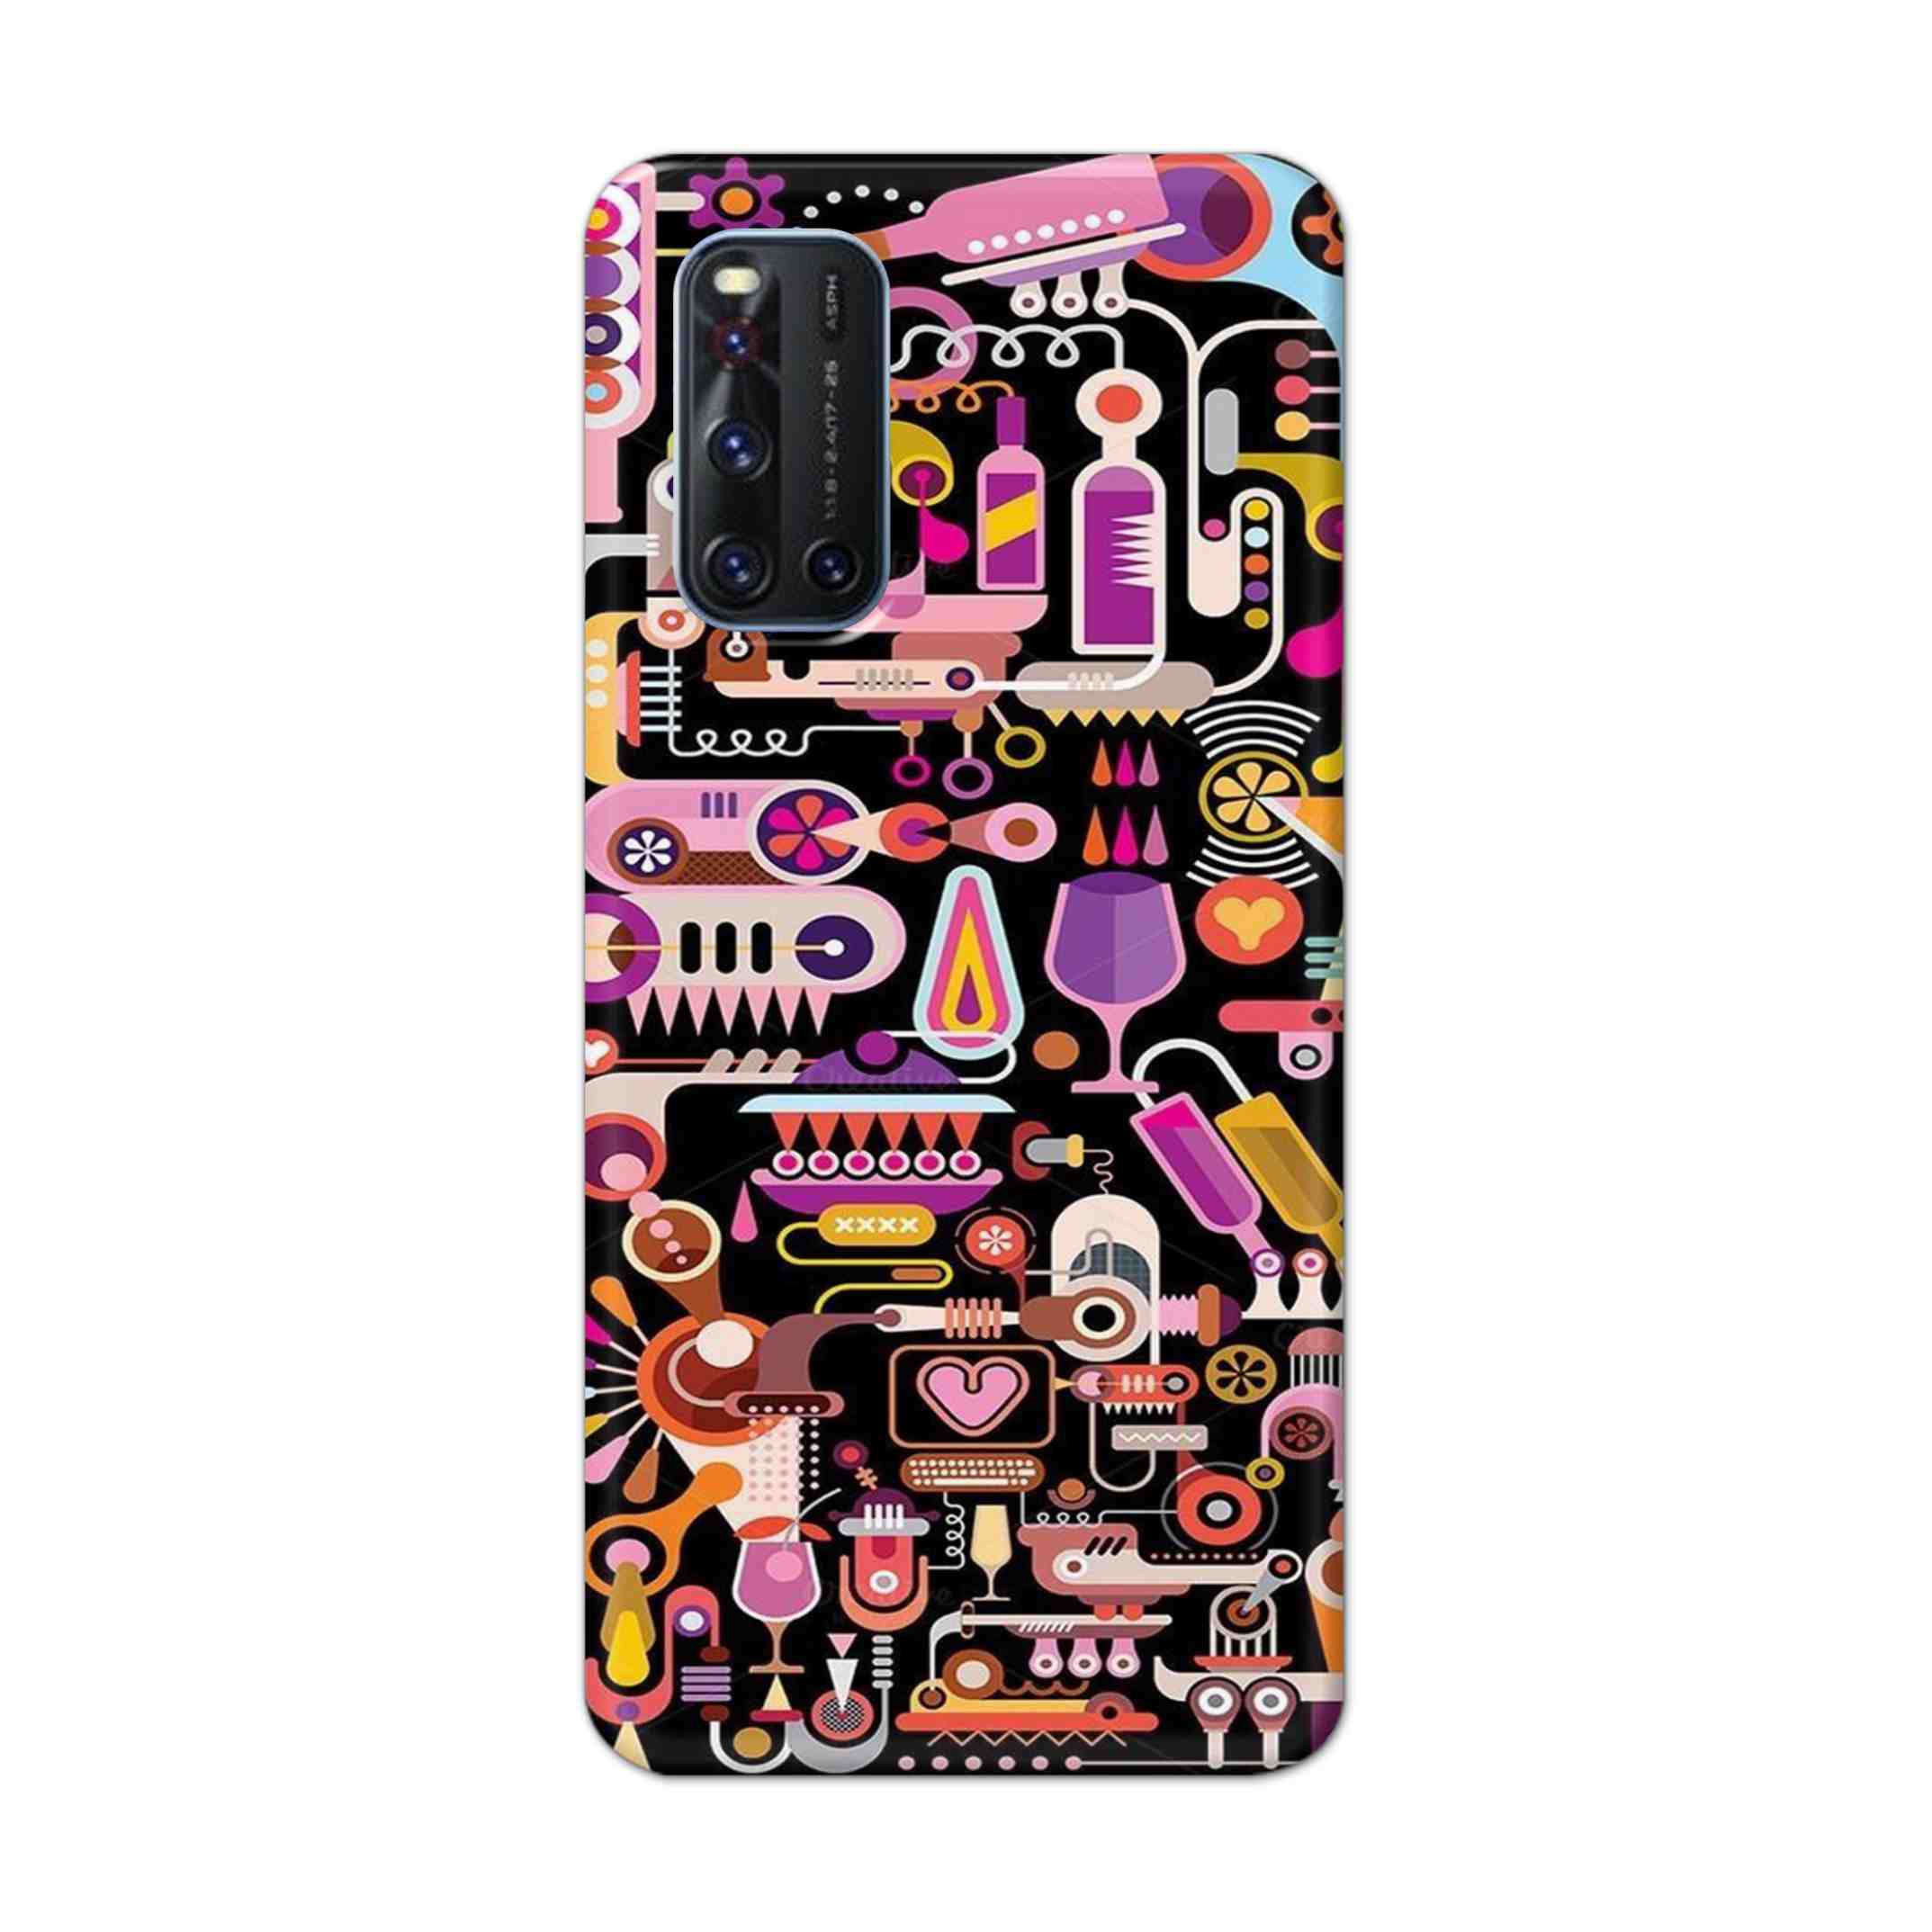 Buy Lab Art Hard Back Mobile Phone Case Cover For VivoV19 Online